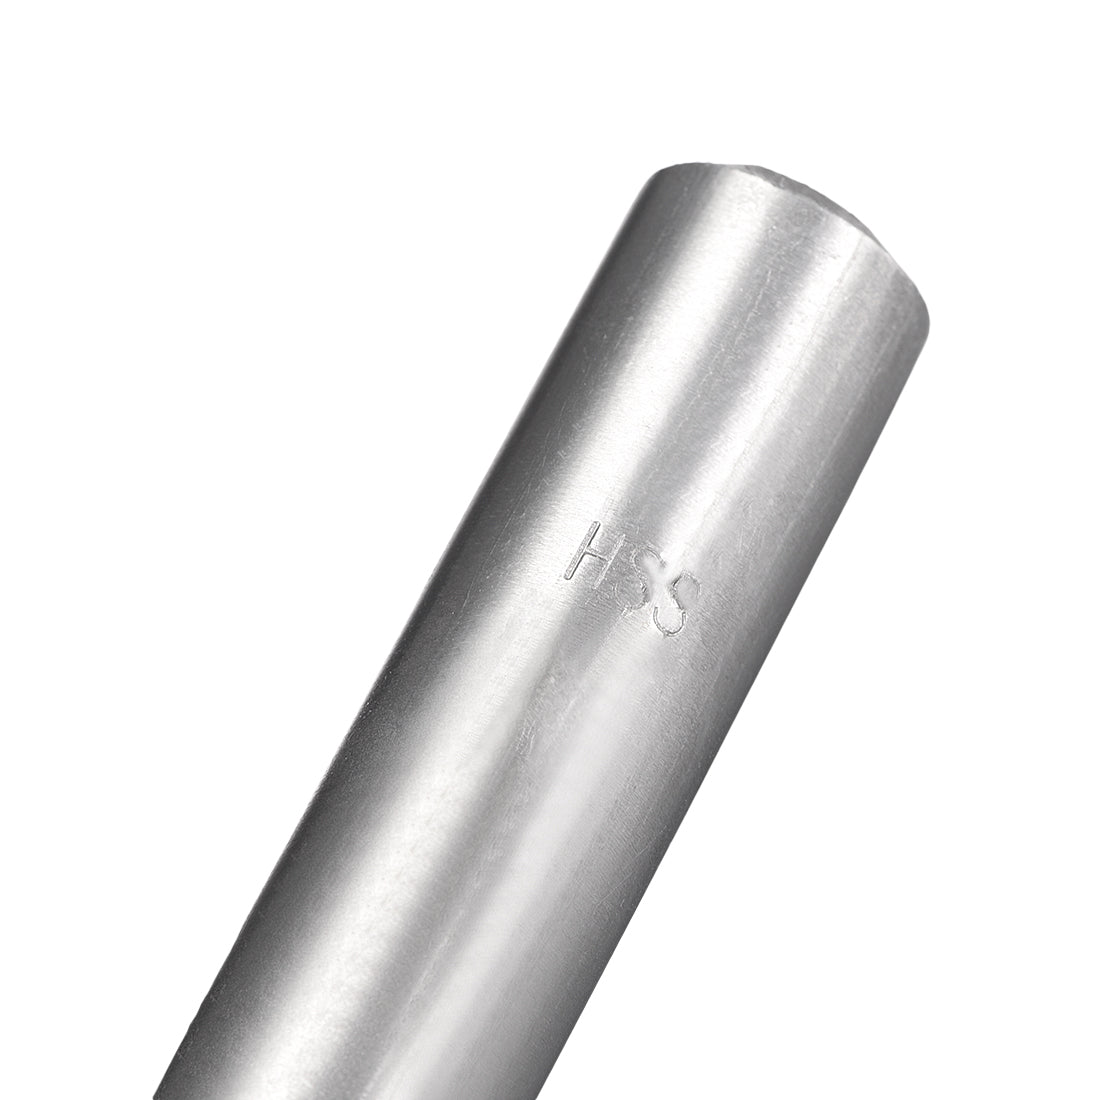 uxcell Uxcell 13mm Twist Drill High Speed Steel Bit HSS-4241 for Steel, Aluminum Alloy 1pcs